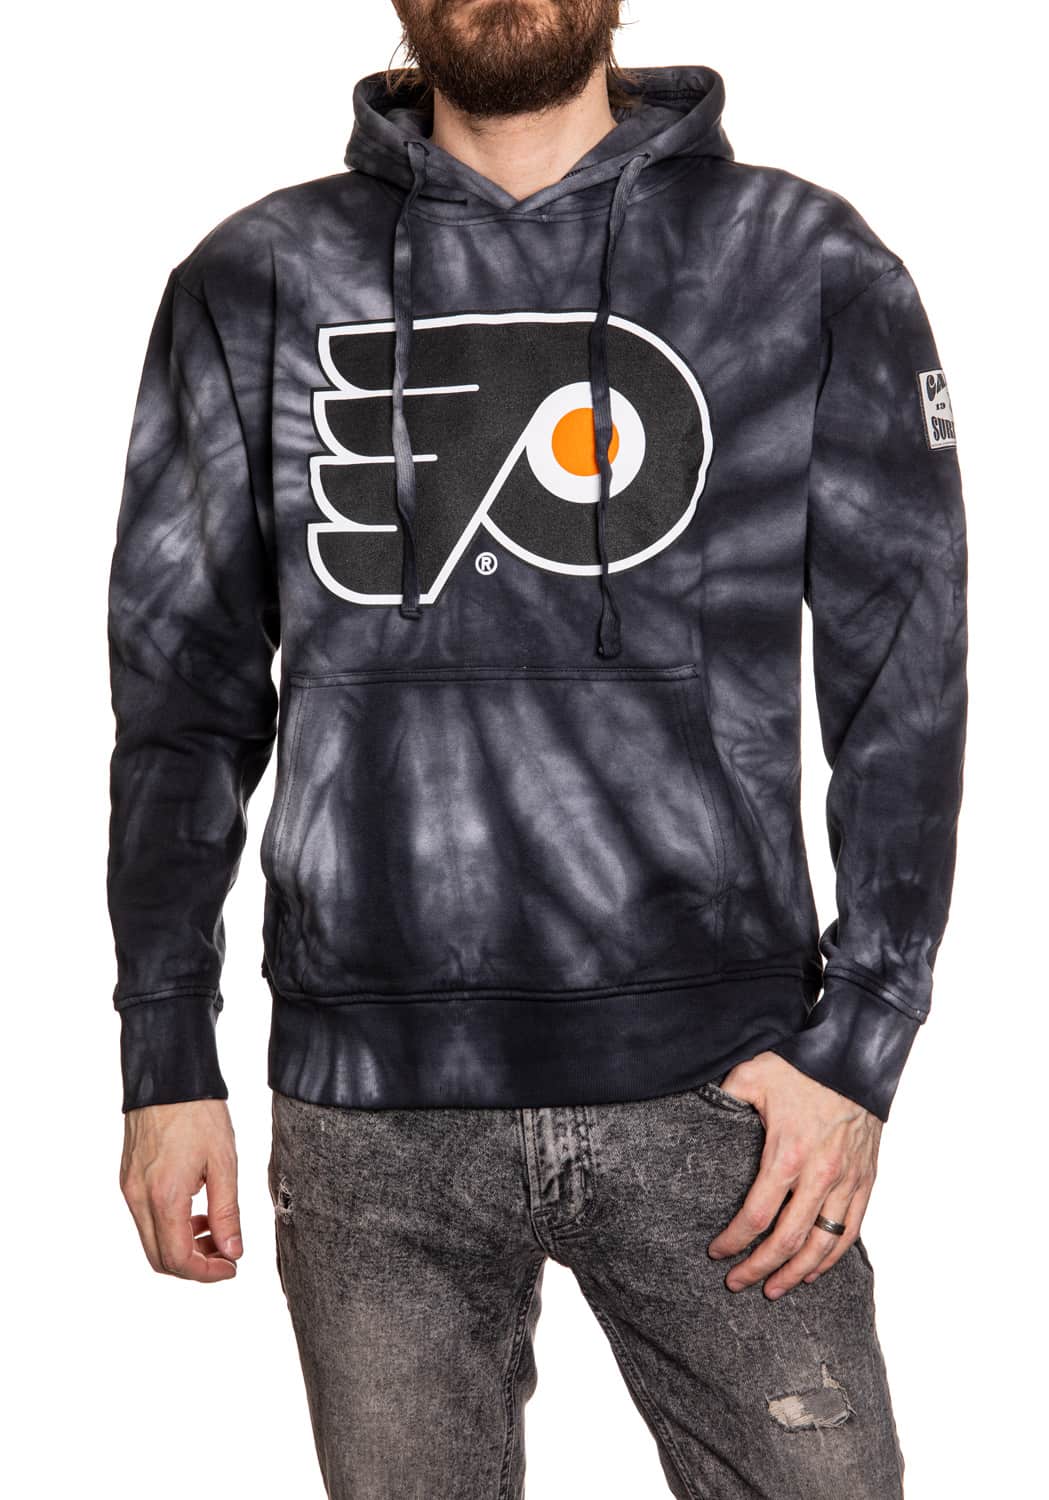 Philadelphia Flyers Spiral Tie Dye Pullover Hoodie in Black Front View